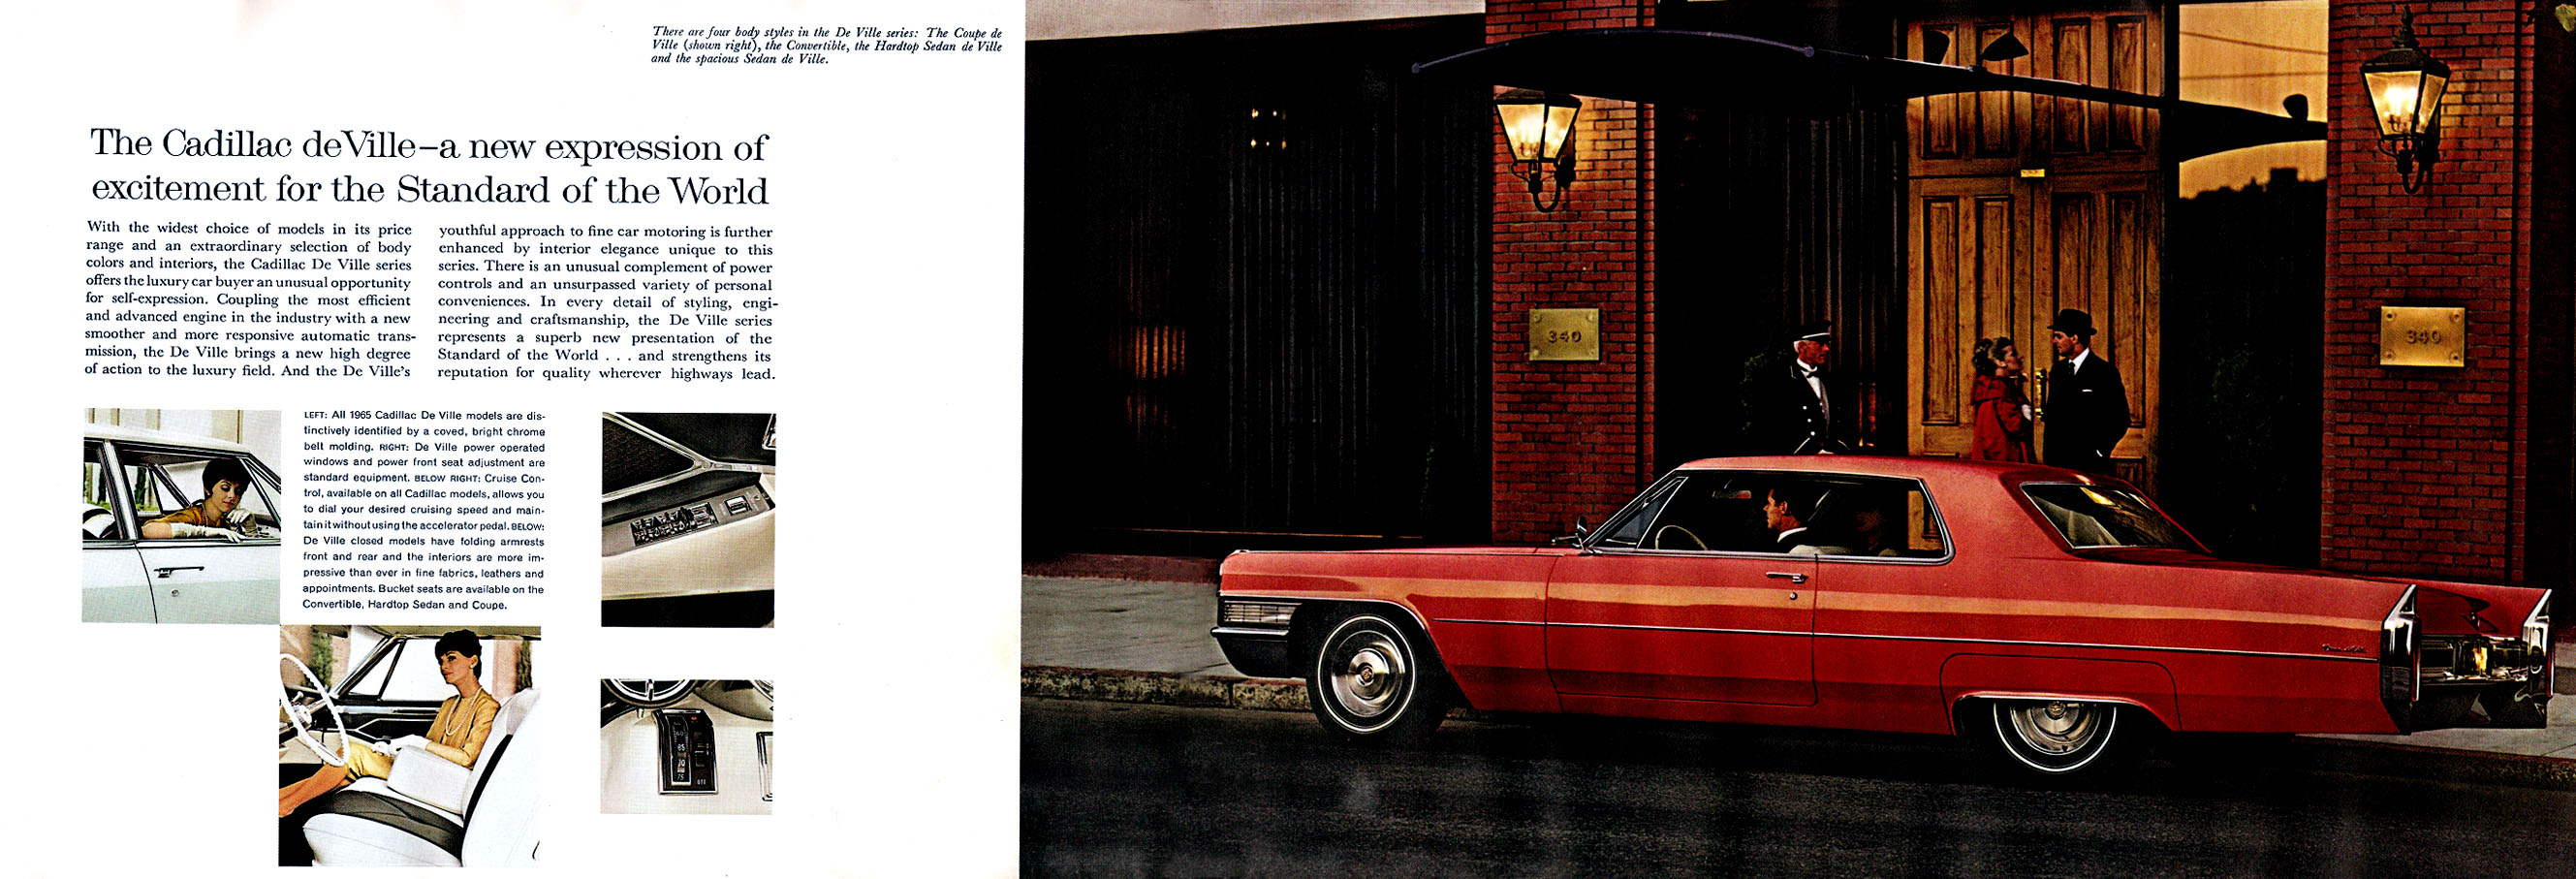 1965_Cadillac_Foldout-02-03